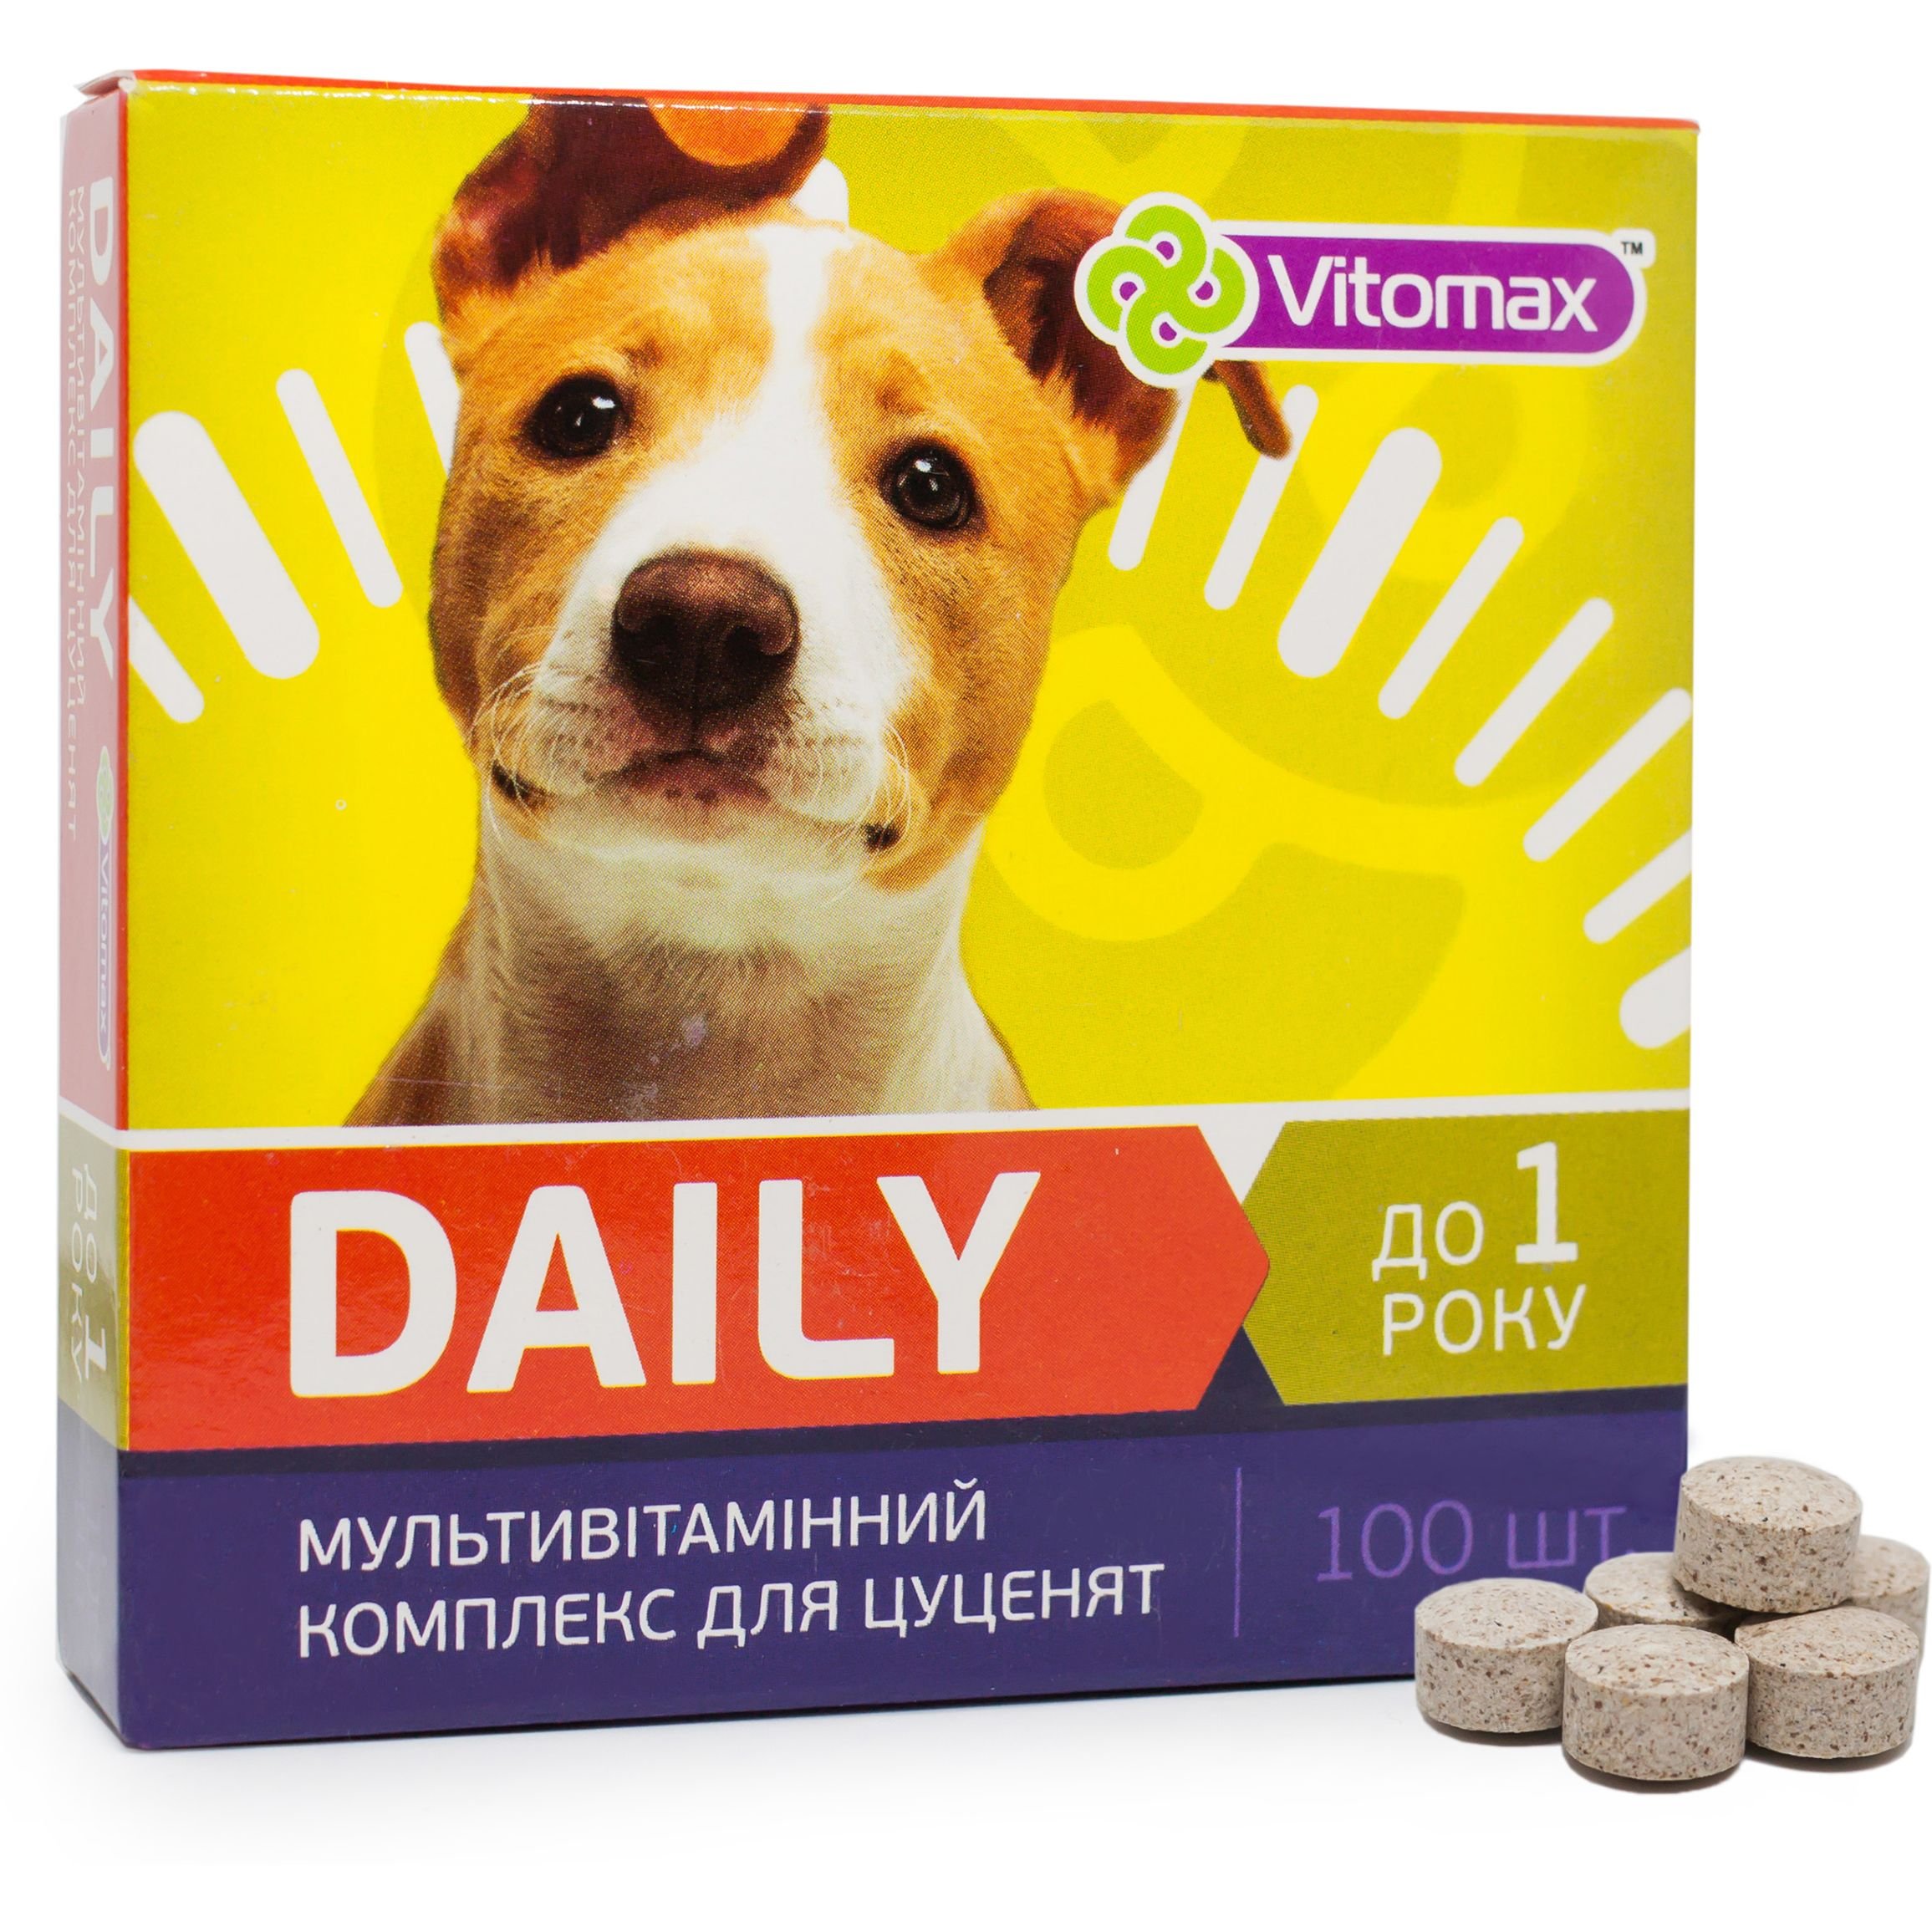 Мультивитаминный комплекс Vitomax Daily для щенков до 1 года, 100 таблеток - фото 2